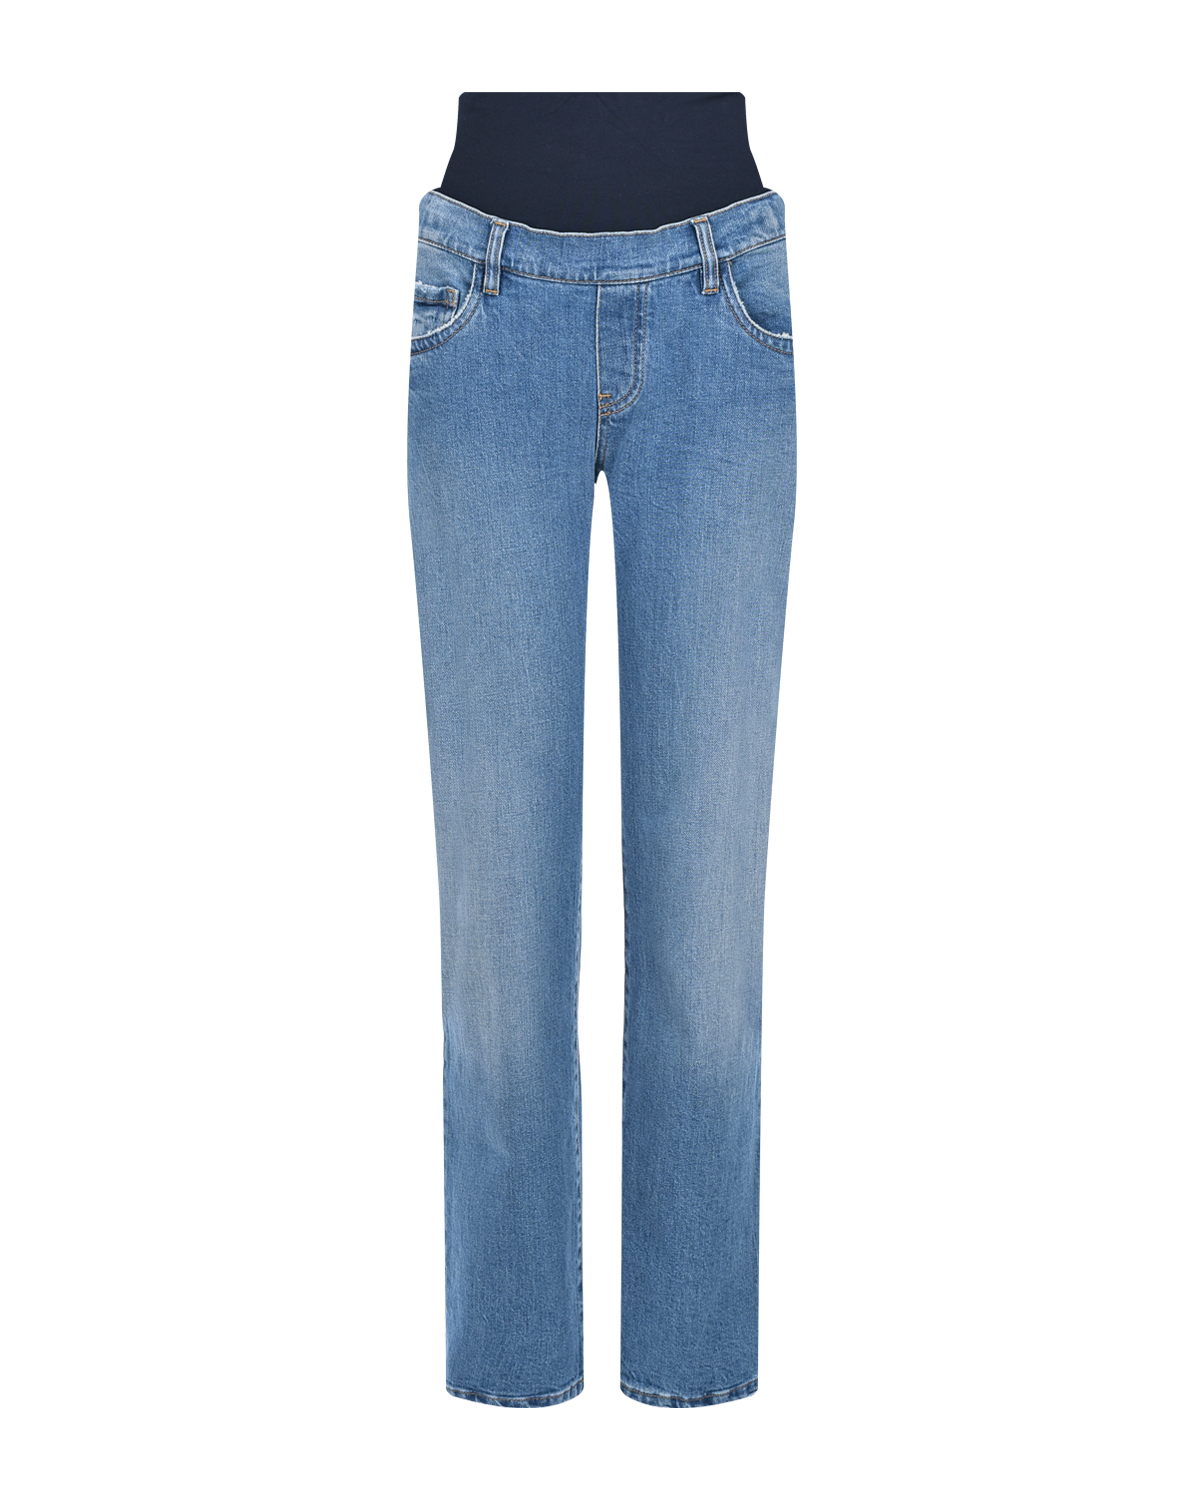 Голубые джинсы для беременных HI-RISE STRAIGHT Pietro Brunelli голубые джинсы с потертостями gulliver 164